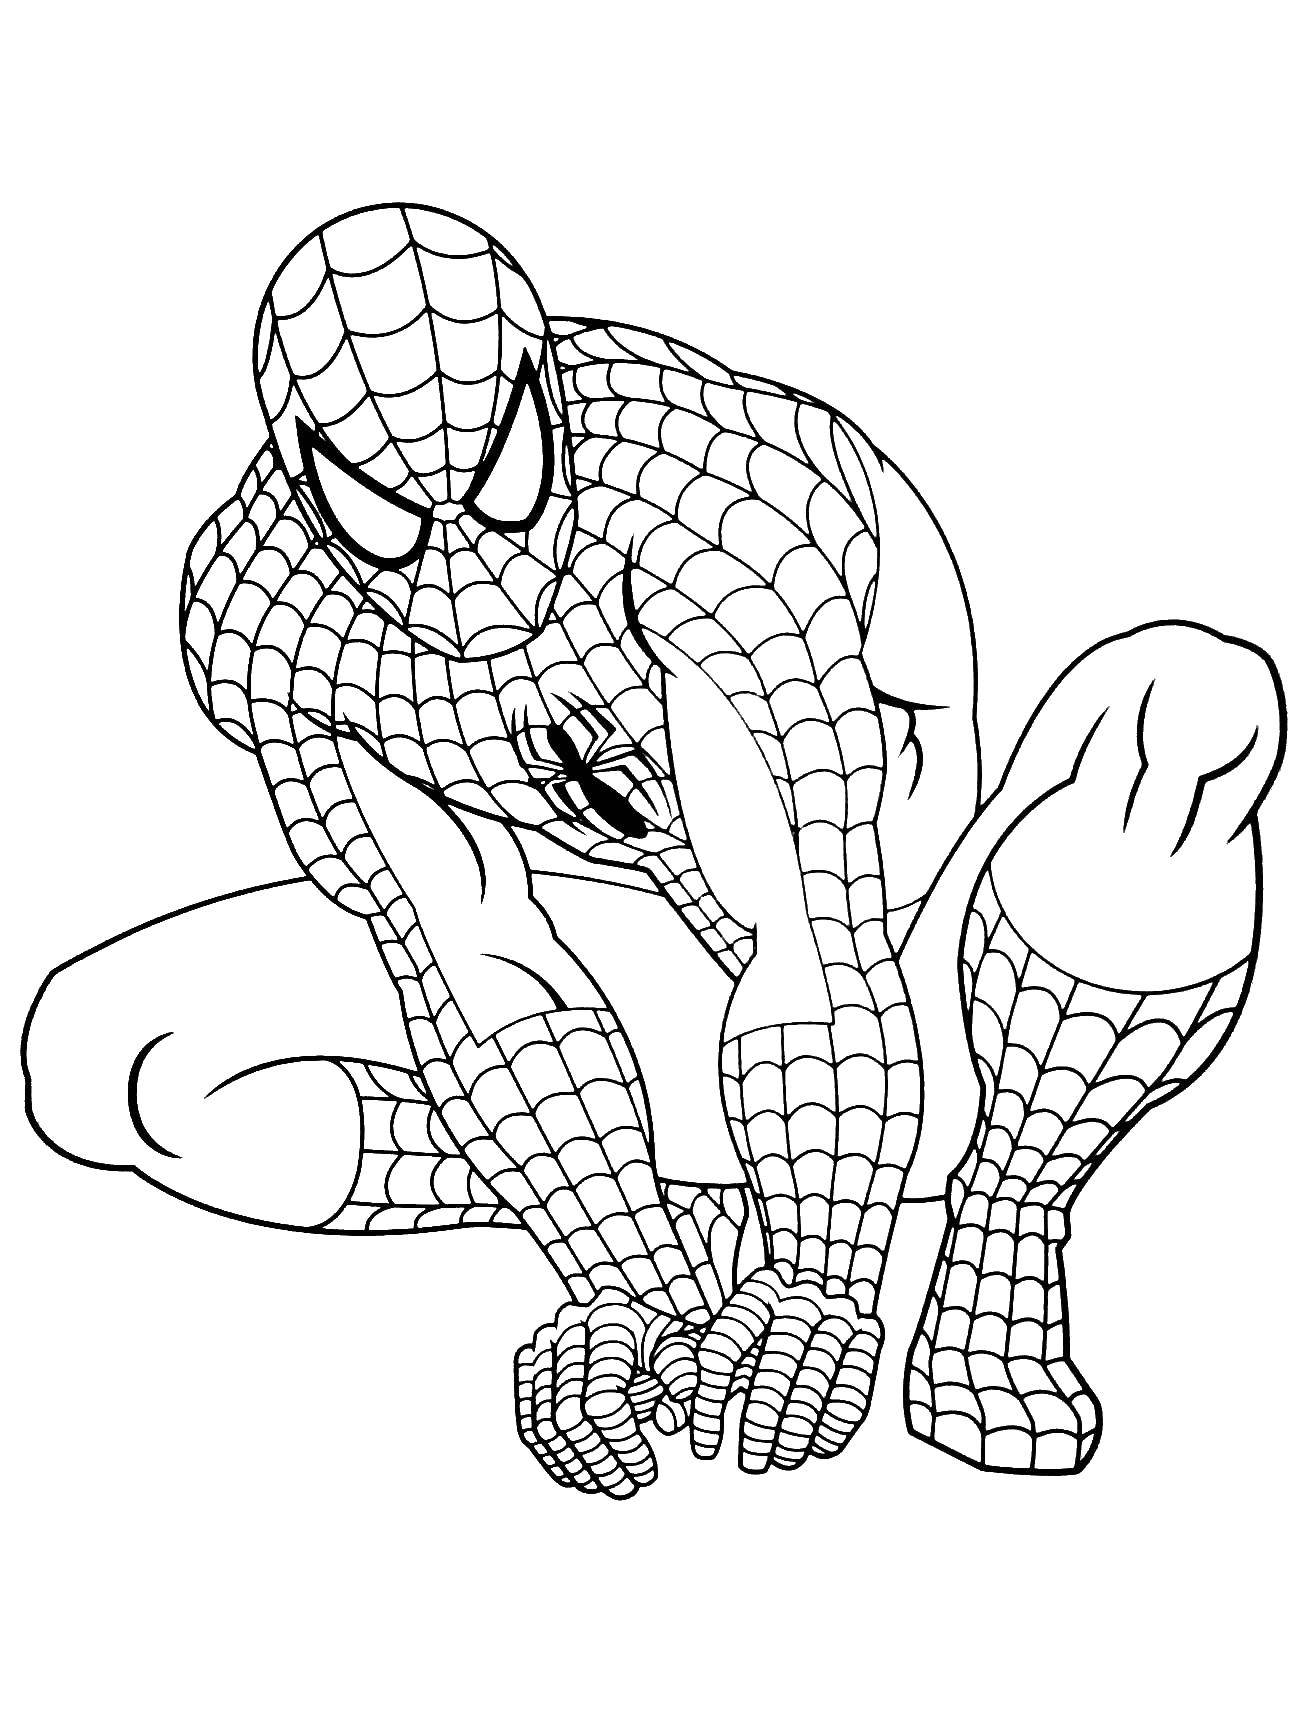 Coloring Comic book hero. Category Comics. Tags:  Comics, Spider-Man, Spider-Man.